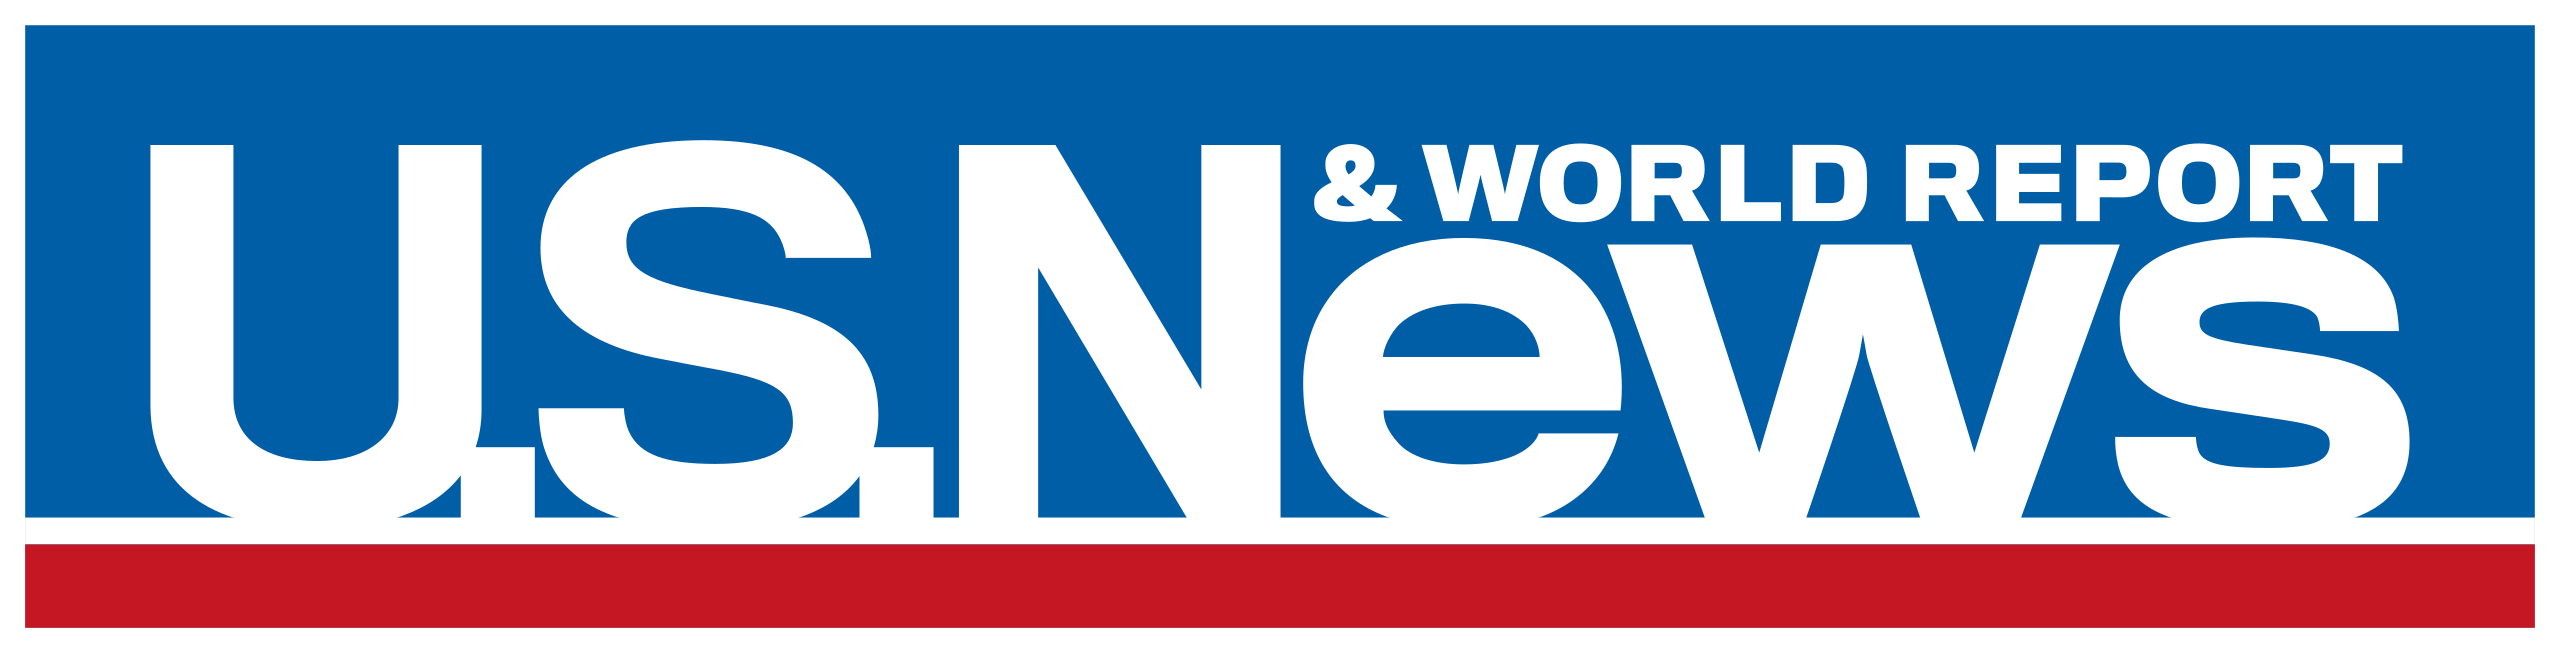 U.S. news and world report logo